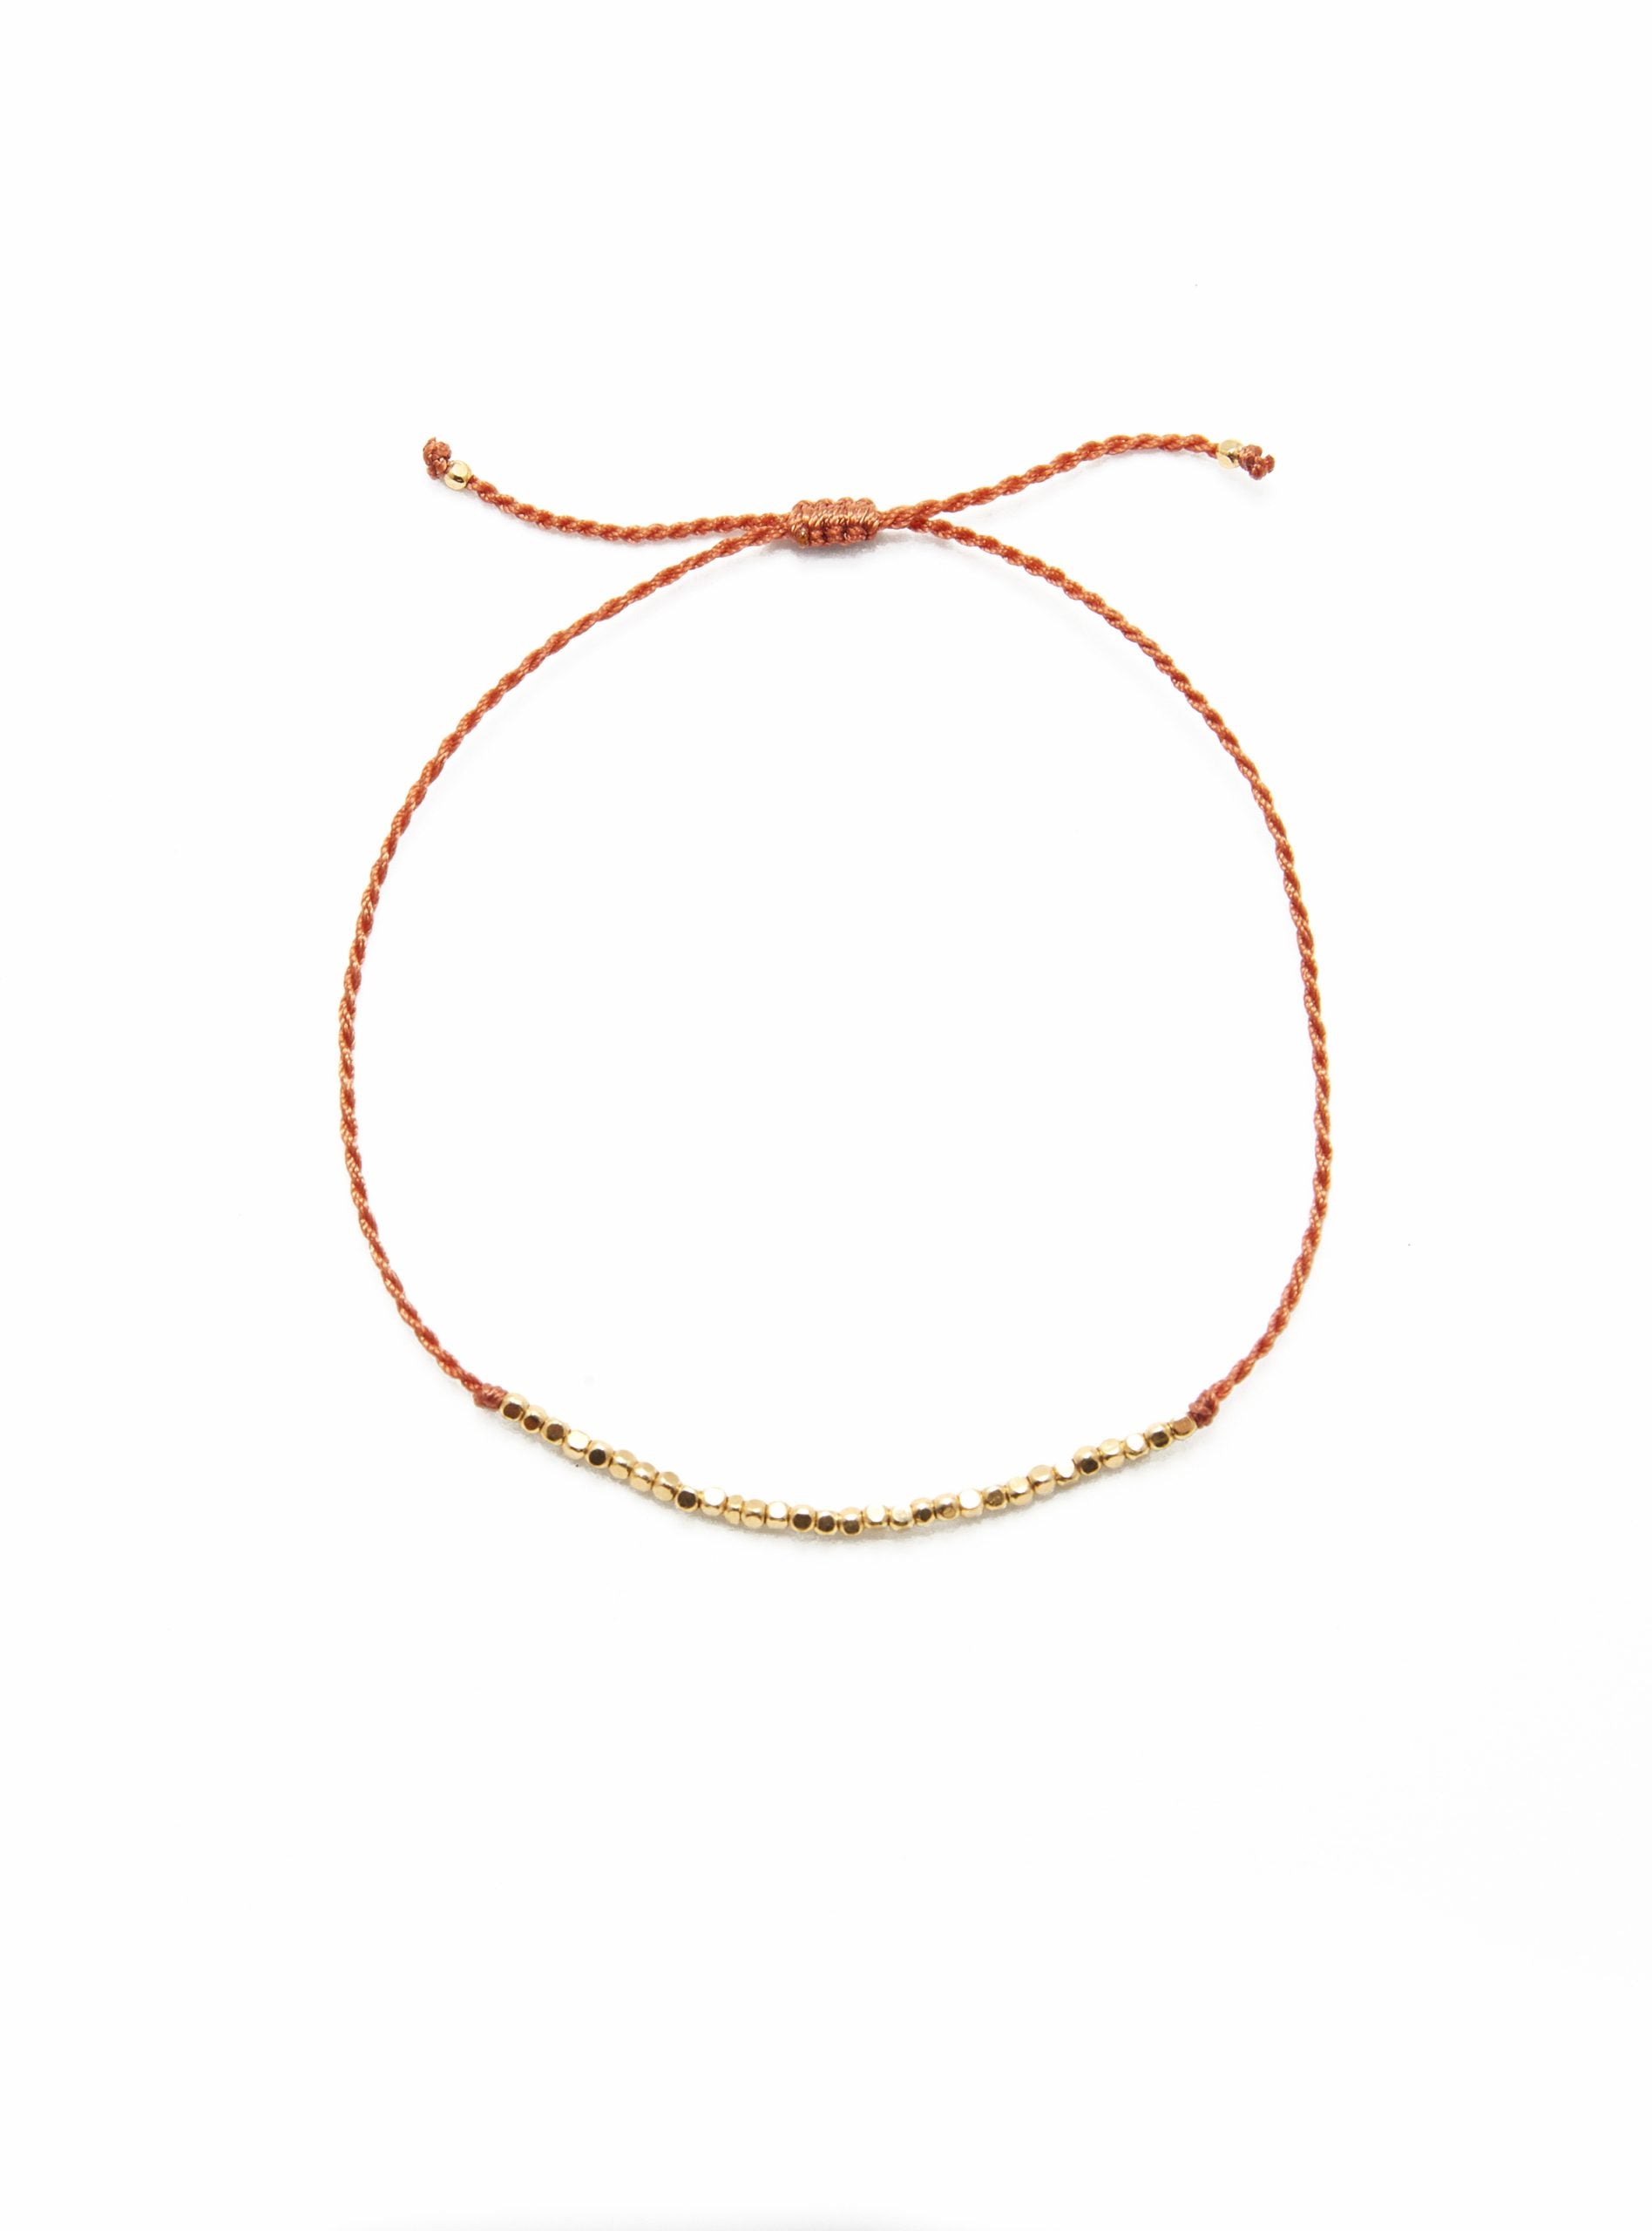 Flori Bracelet Gold - Beads Earth Tone